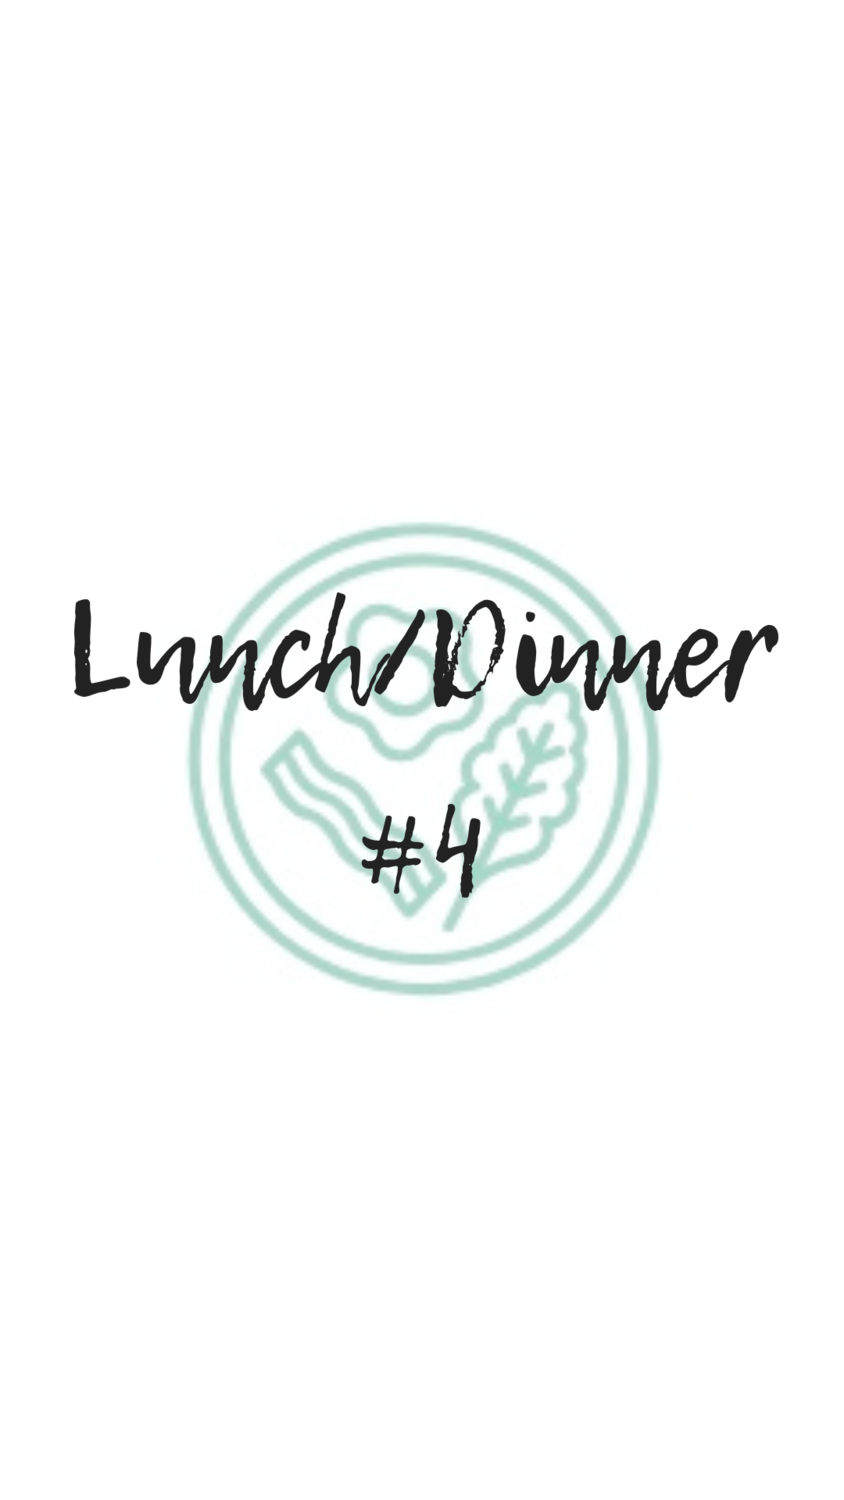 Lunch/Dinner #4